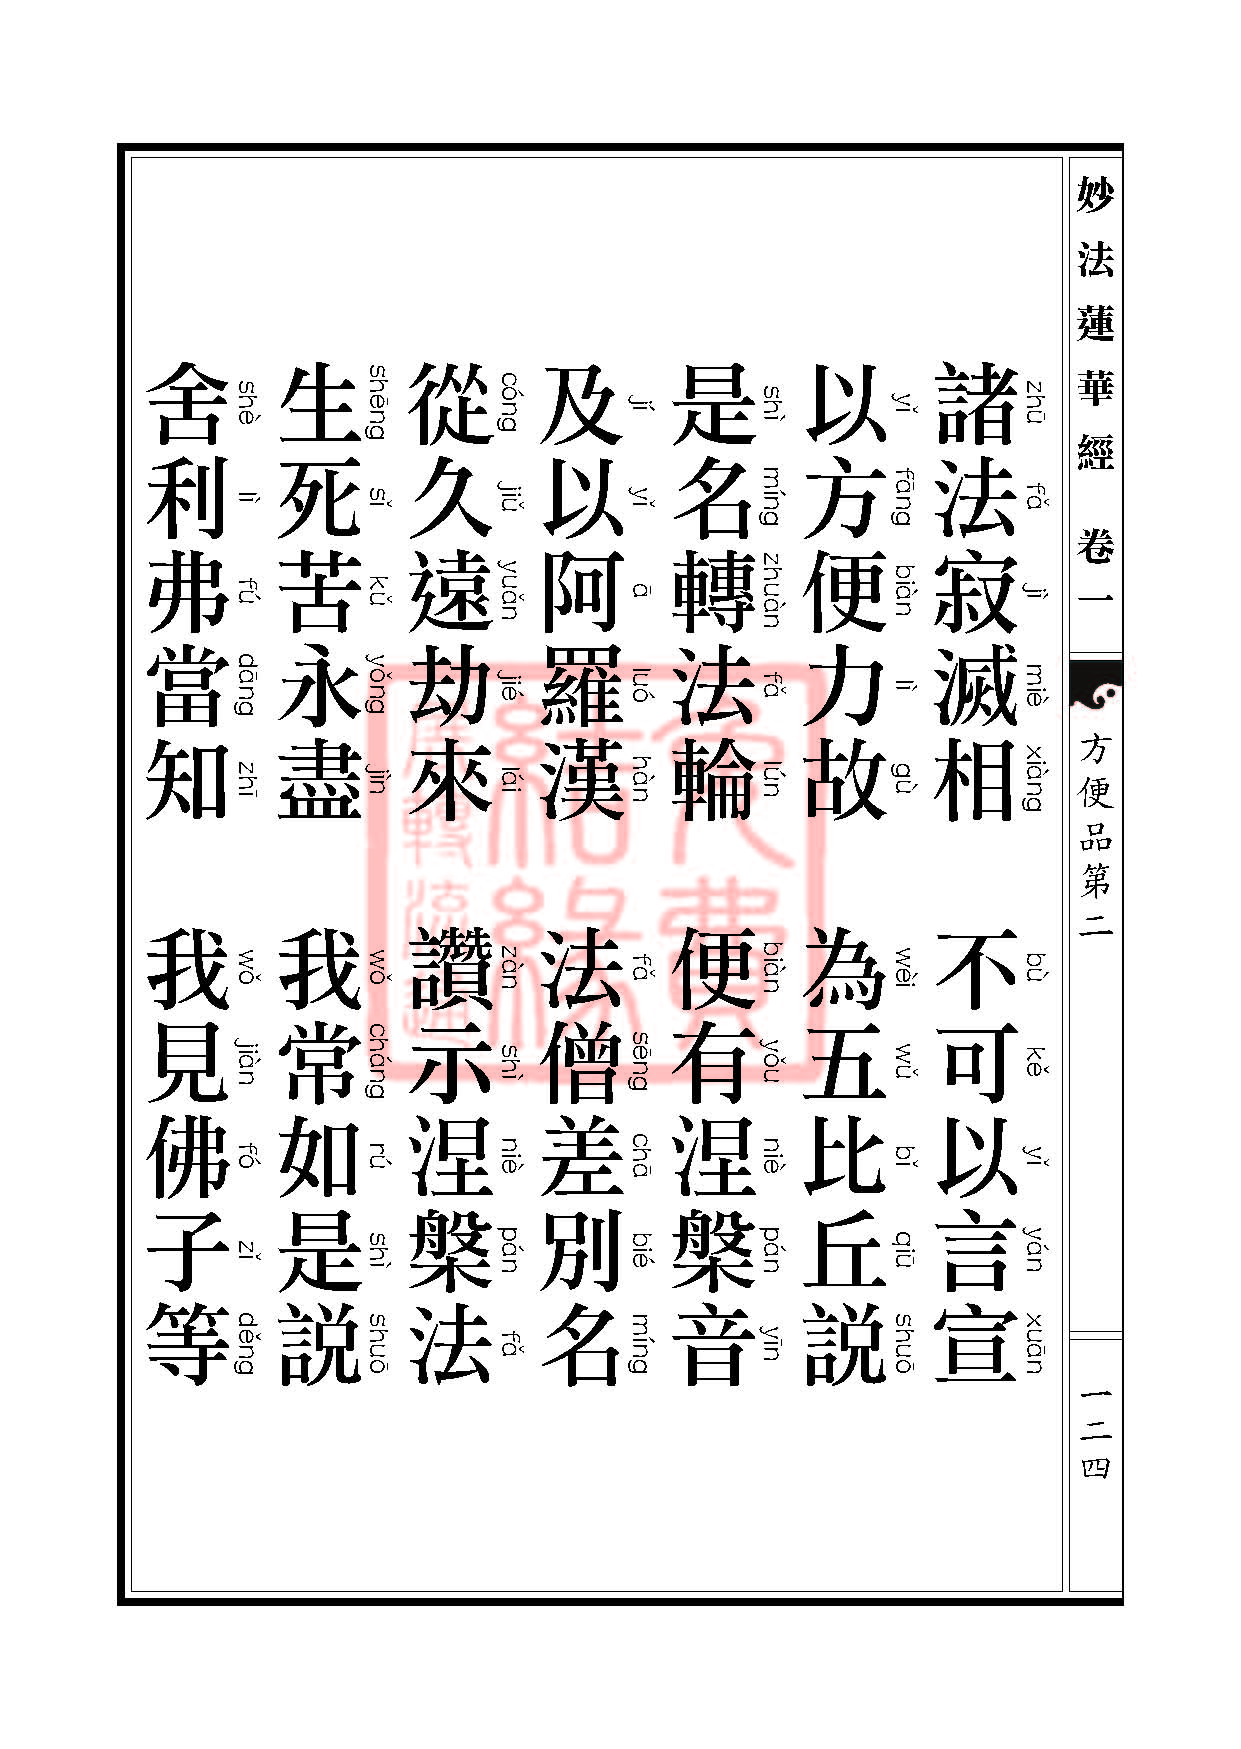 Book_FHJ_HK-A6-PY_Web_ҳ_124.jpg